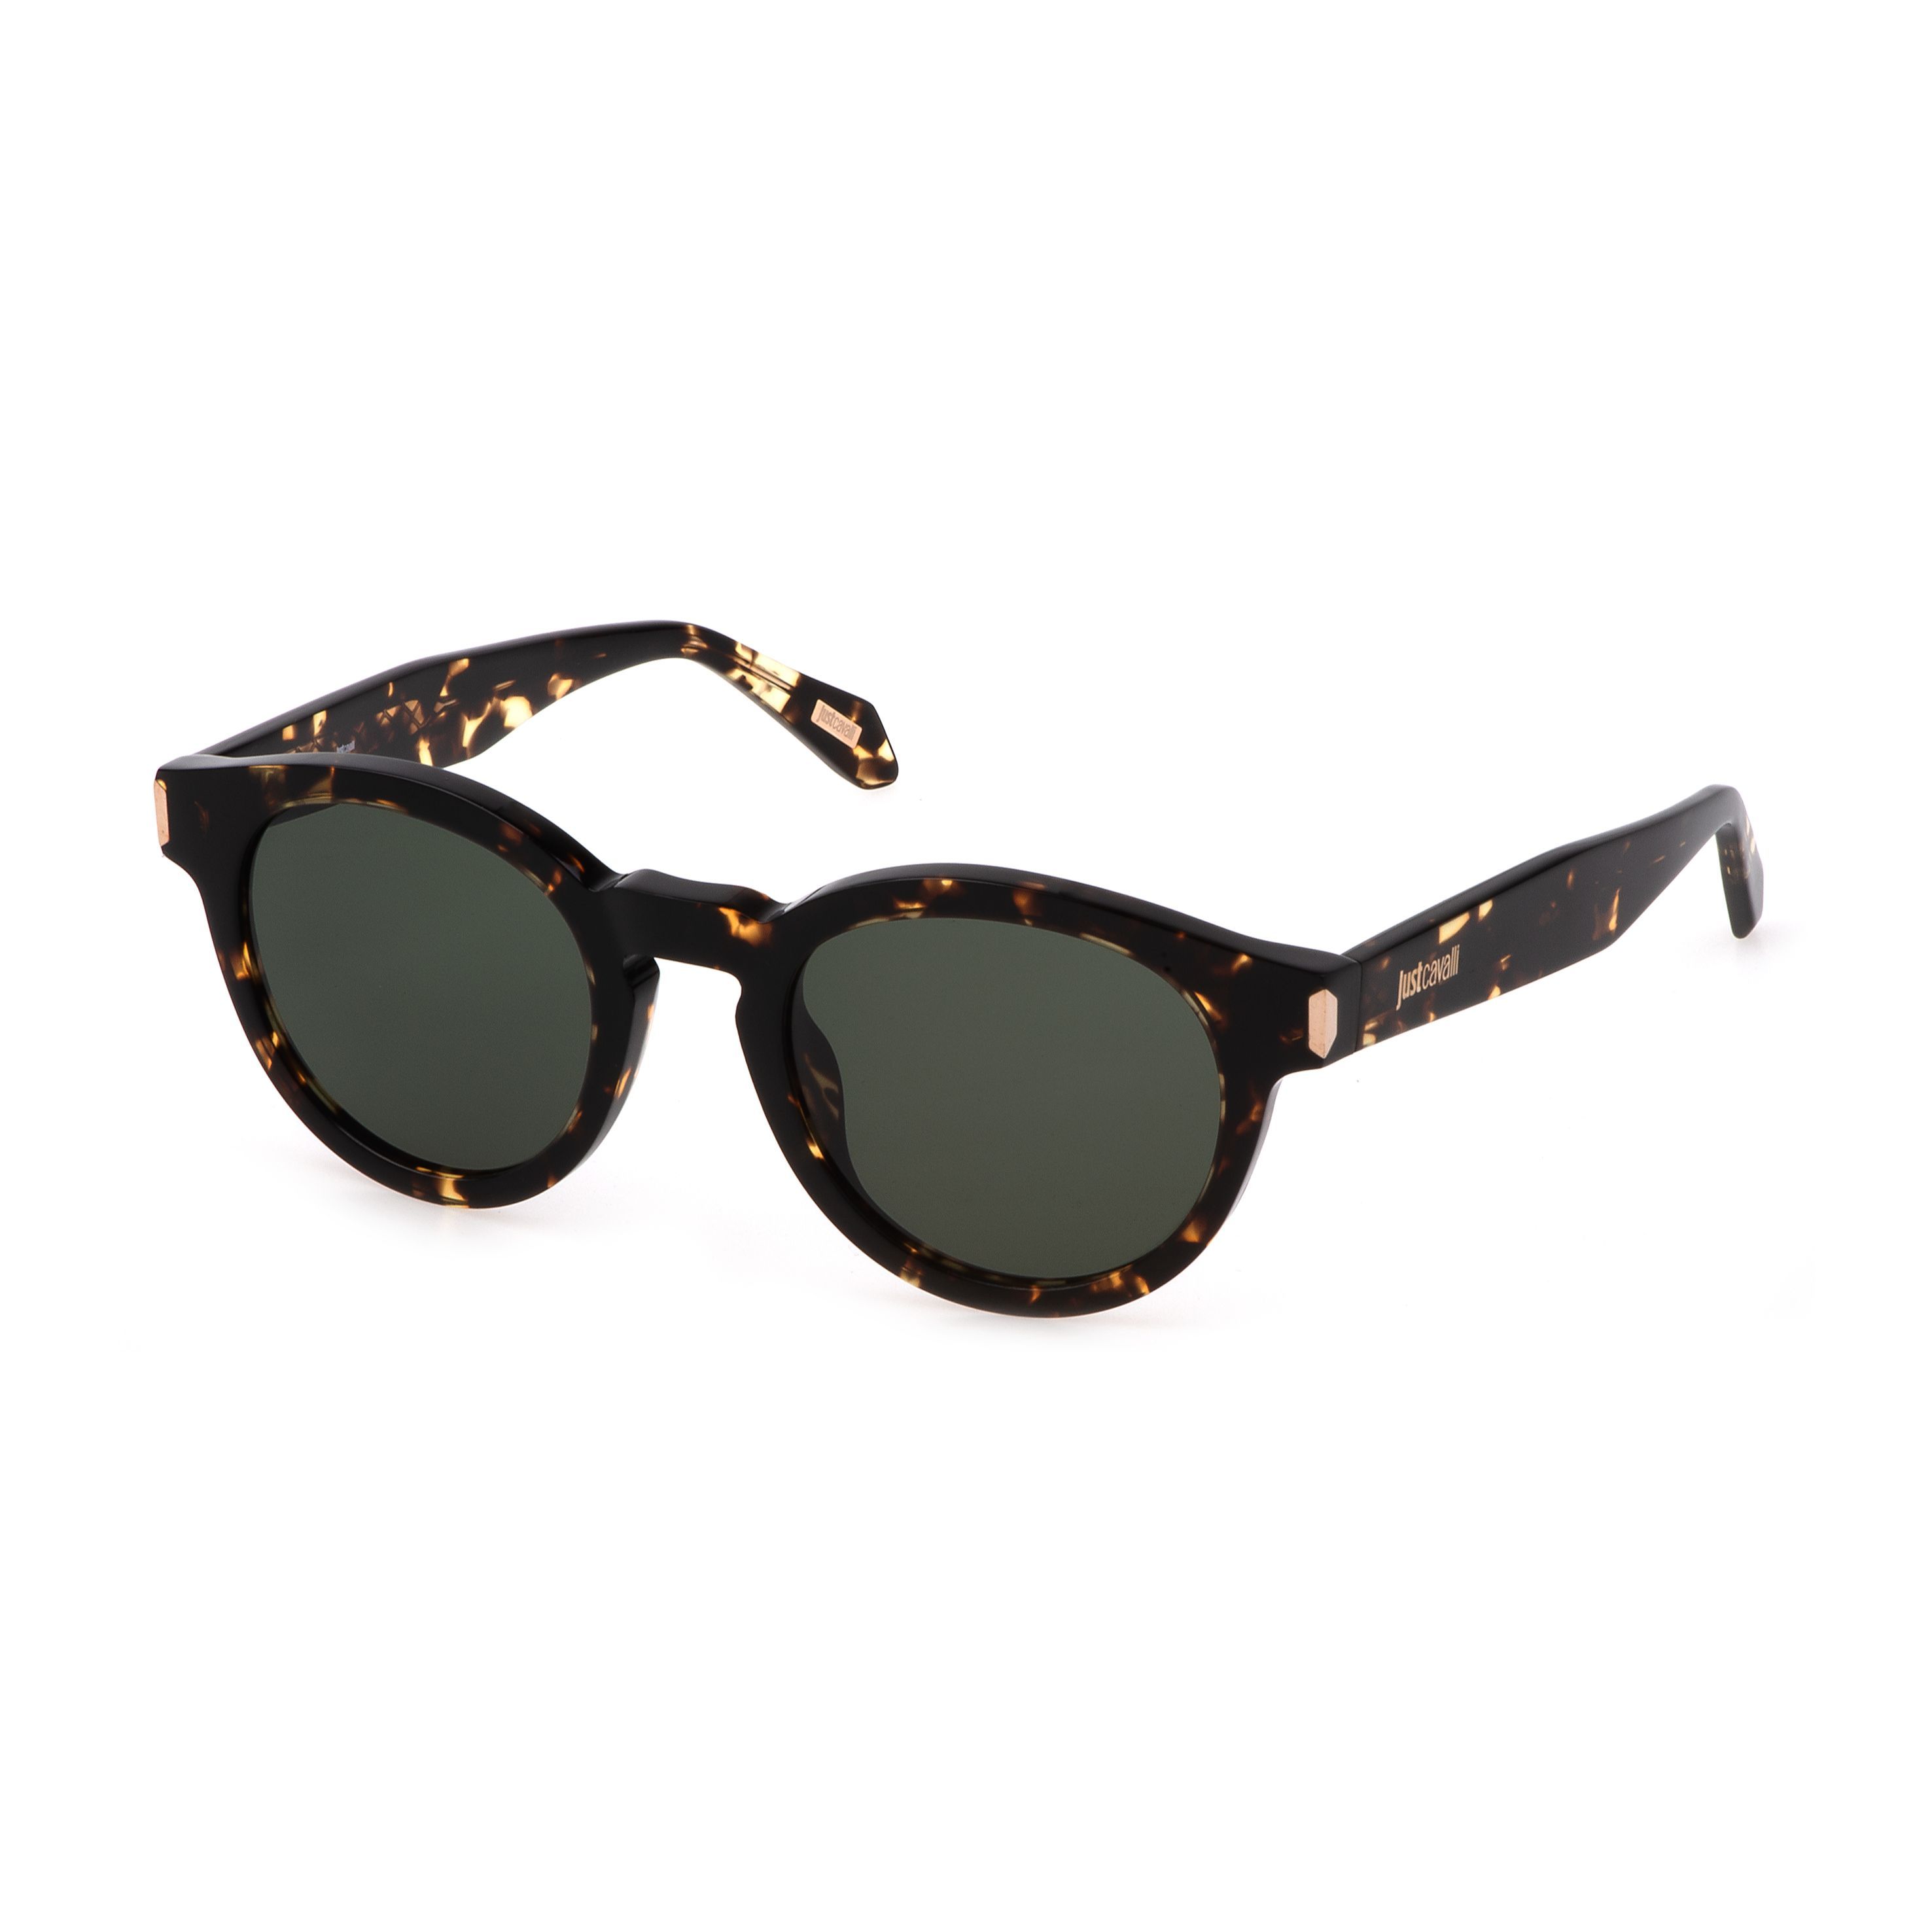 SJC025 Panthos Sunglasses 780 - size 50